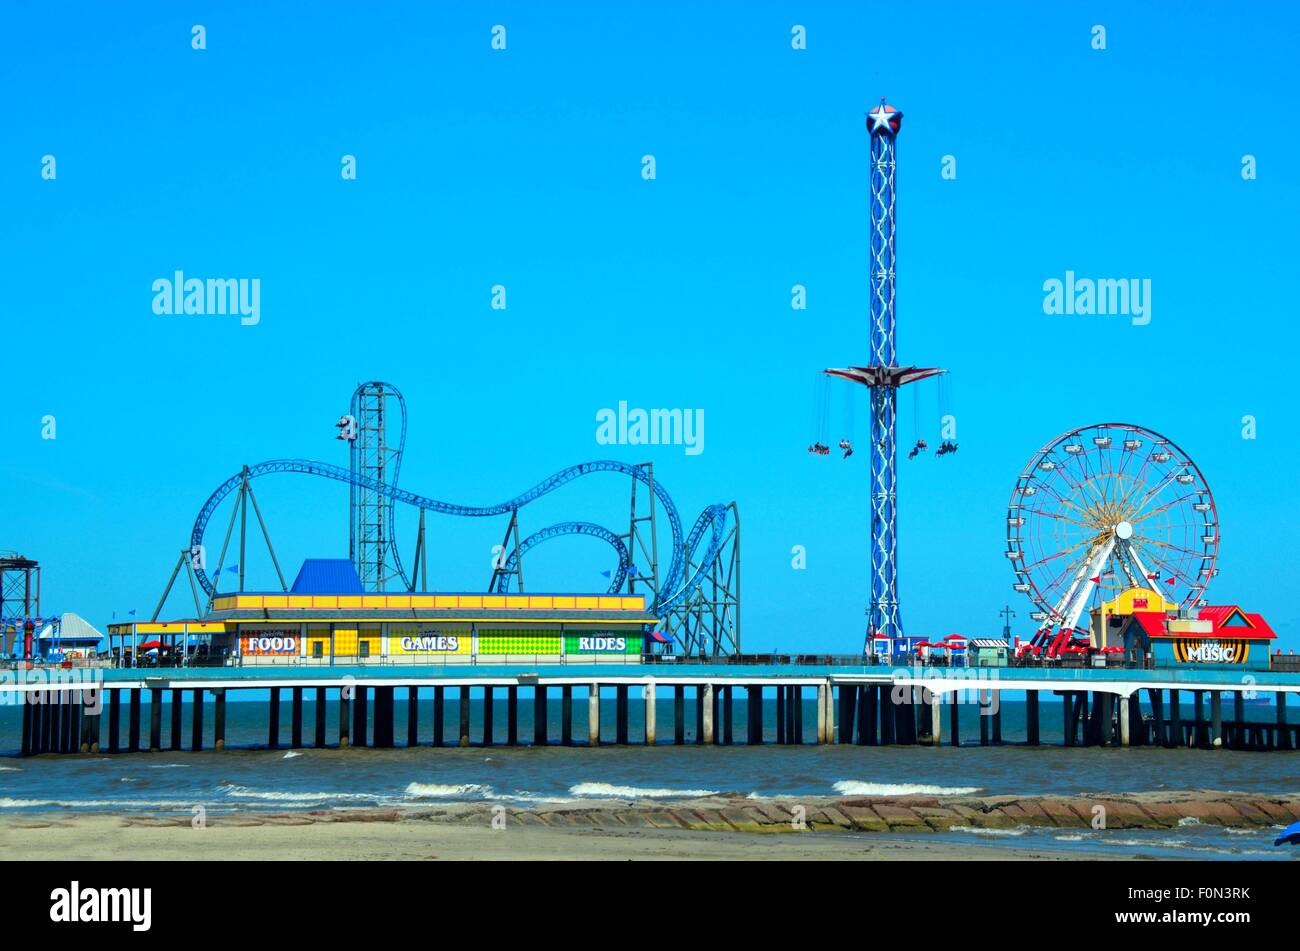 Amusement park located on a ocean beachfront Stock Photo